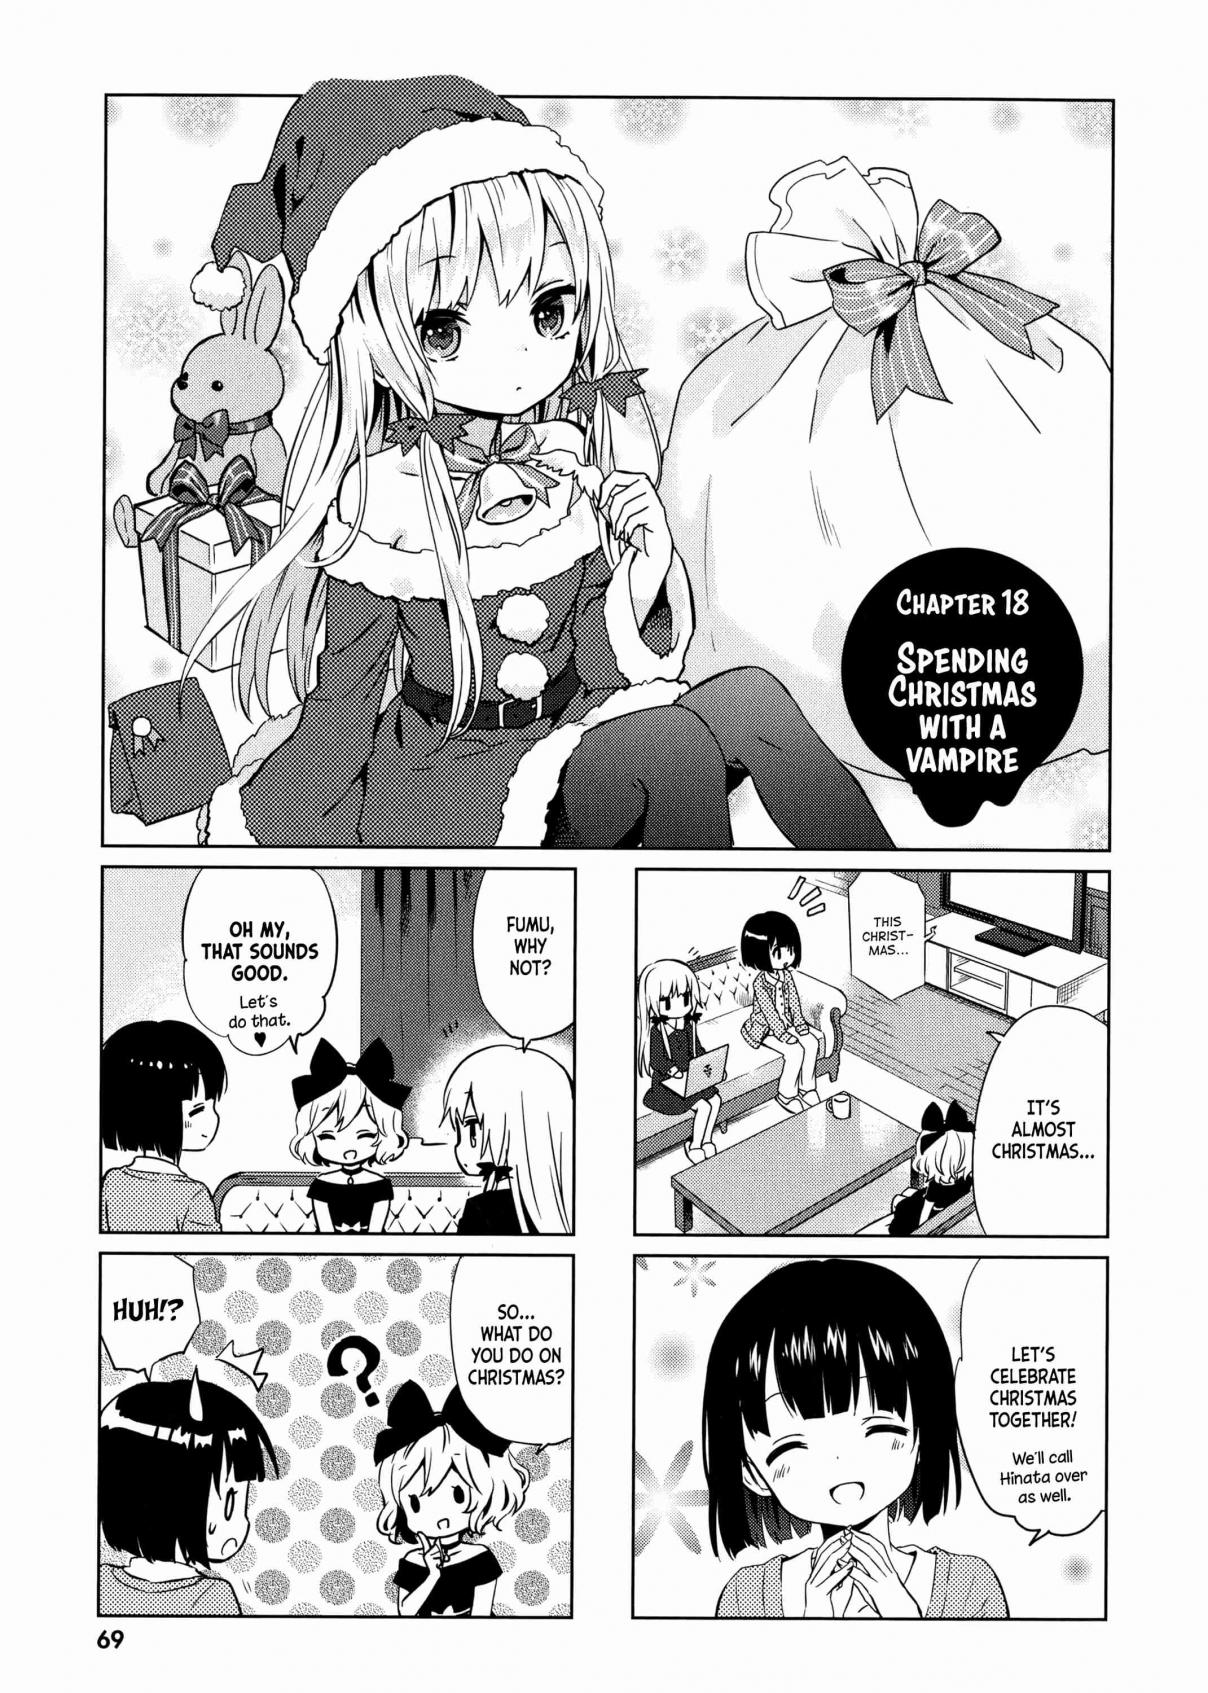 Tonari no Kyuuketsuki san Vol. 2 Ch. 18 Spending Christmas with a vampire